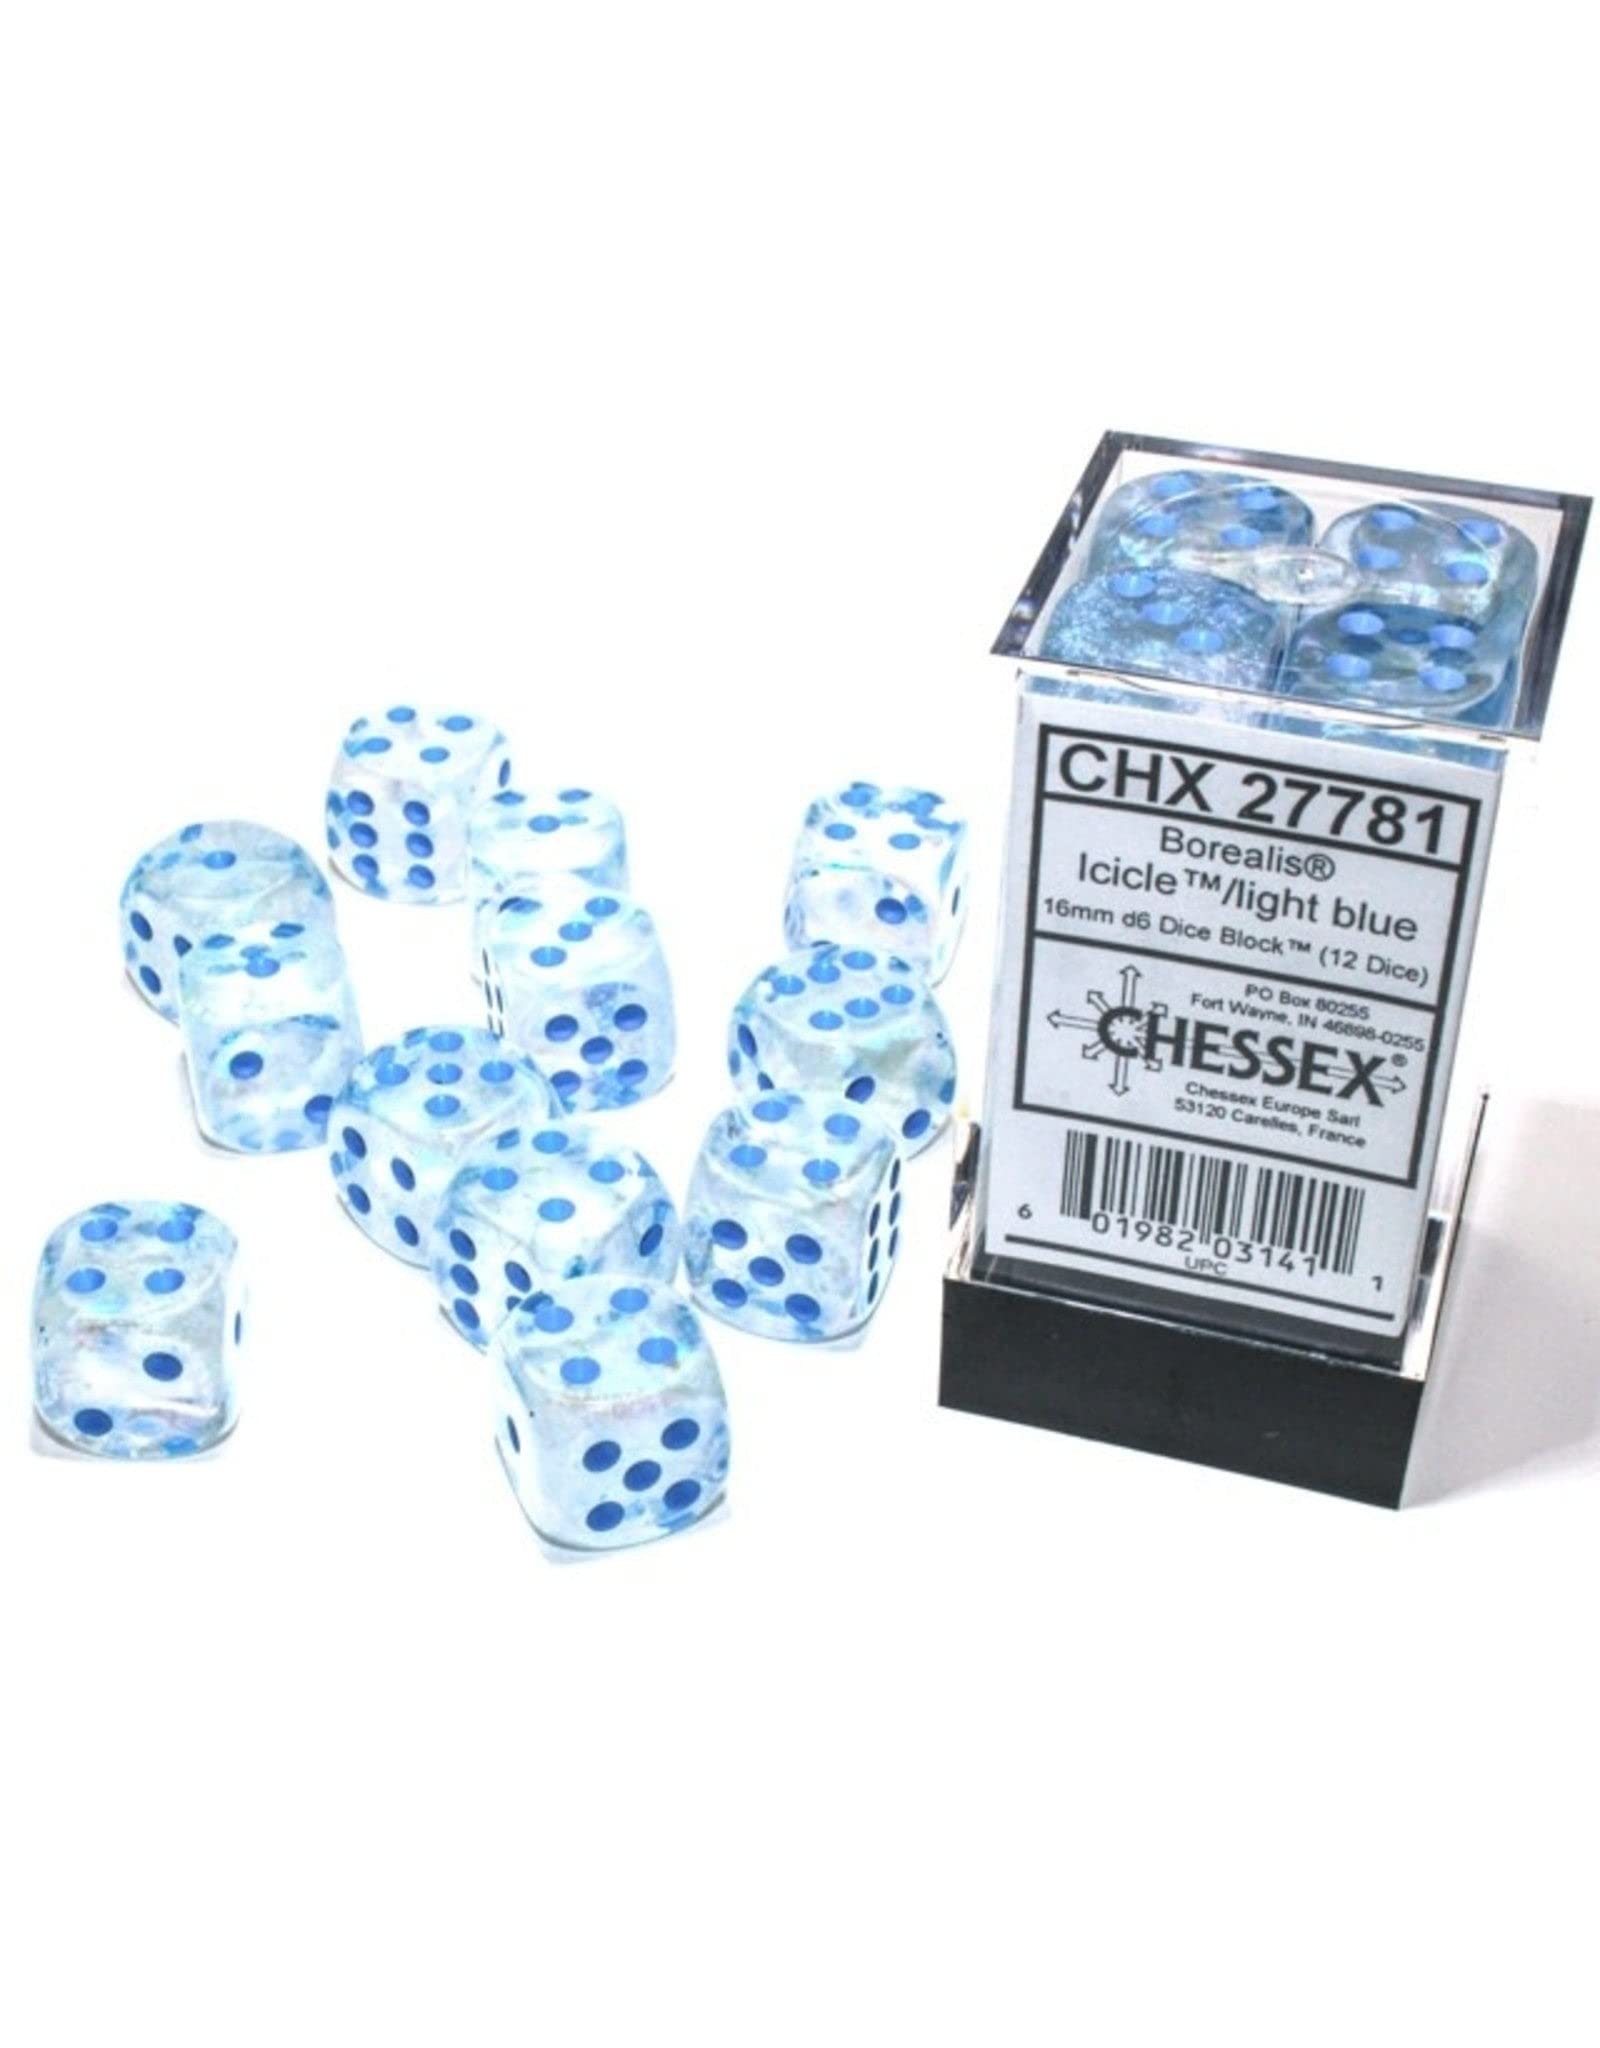 Chessex Borealis 16mm d6 Icicle/light blue Luminary Dice Block (12 dice) კამათელი